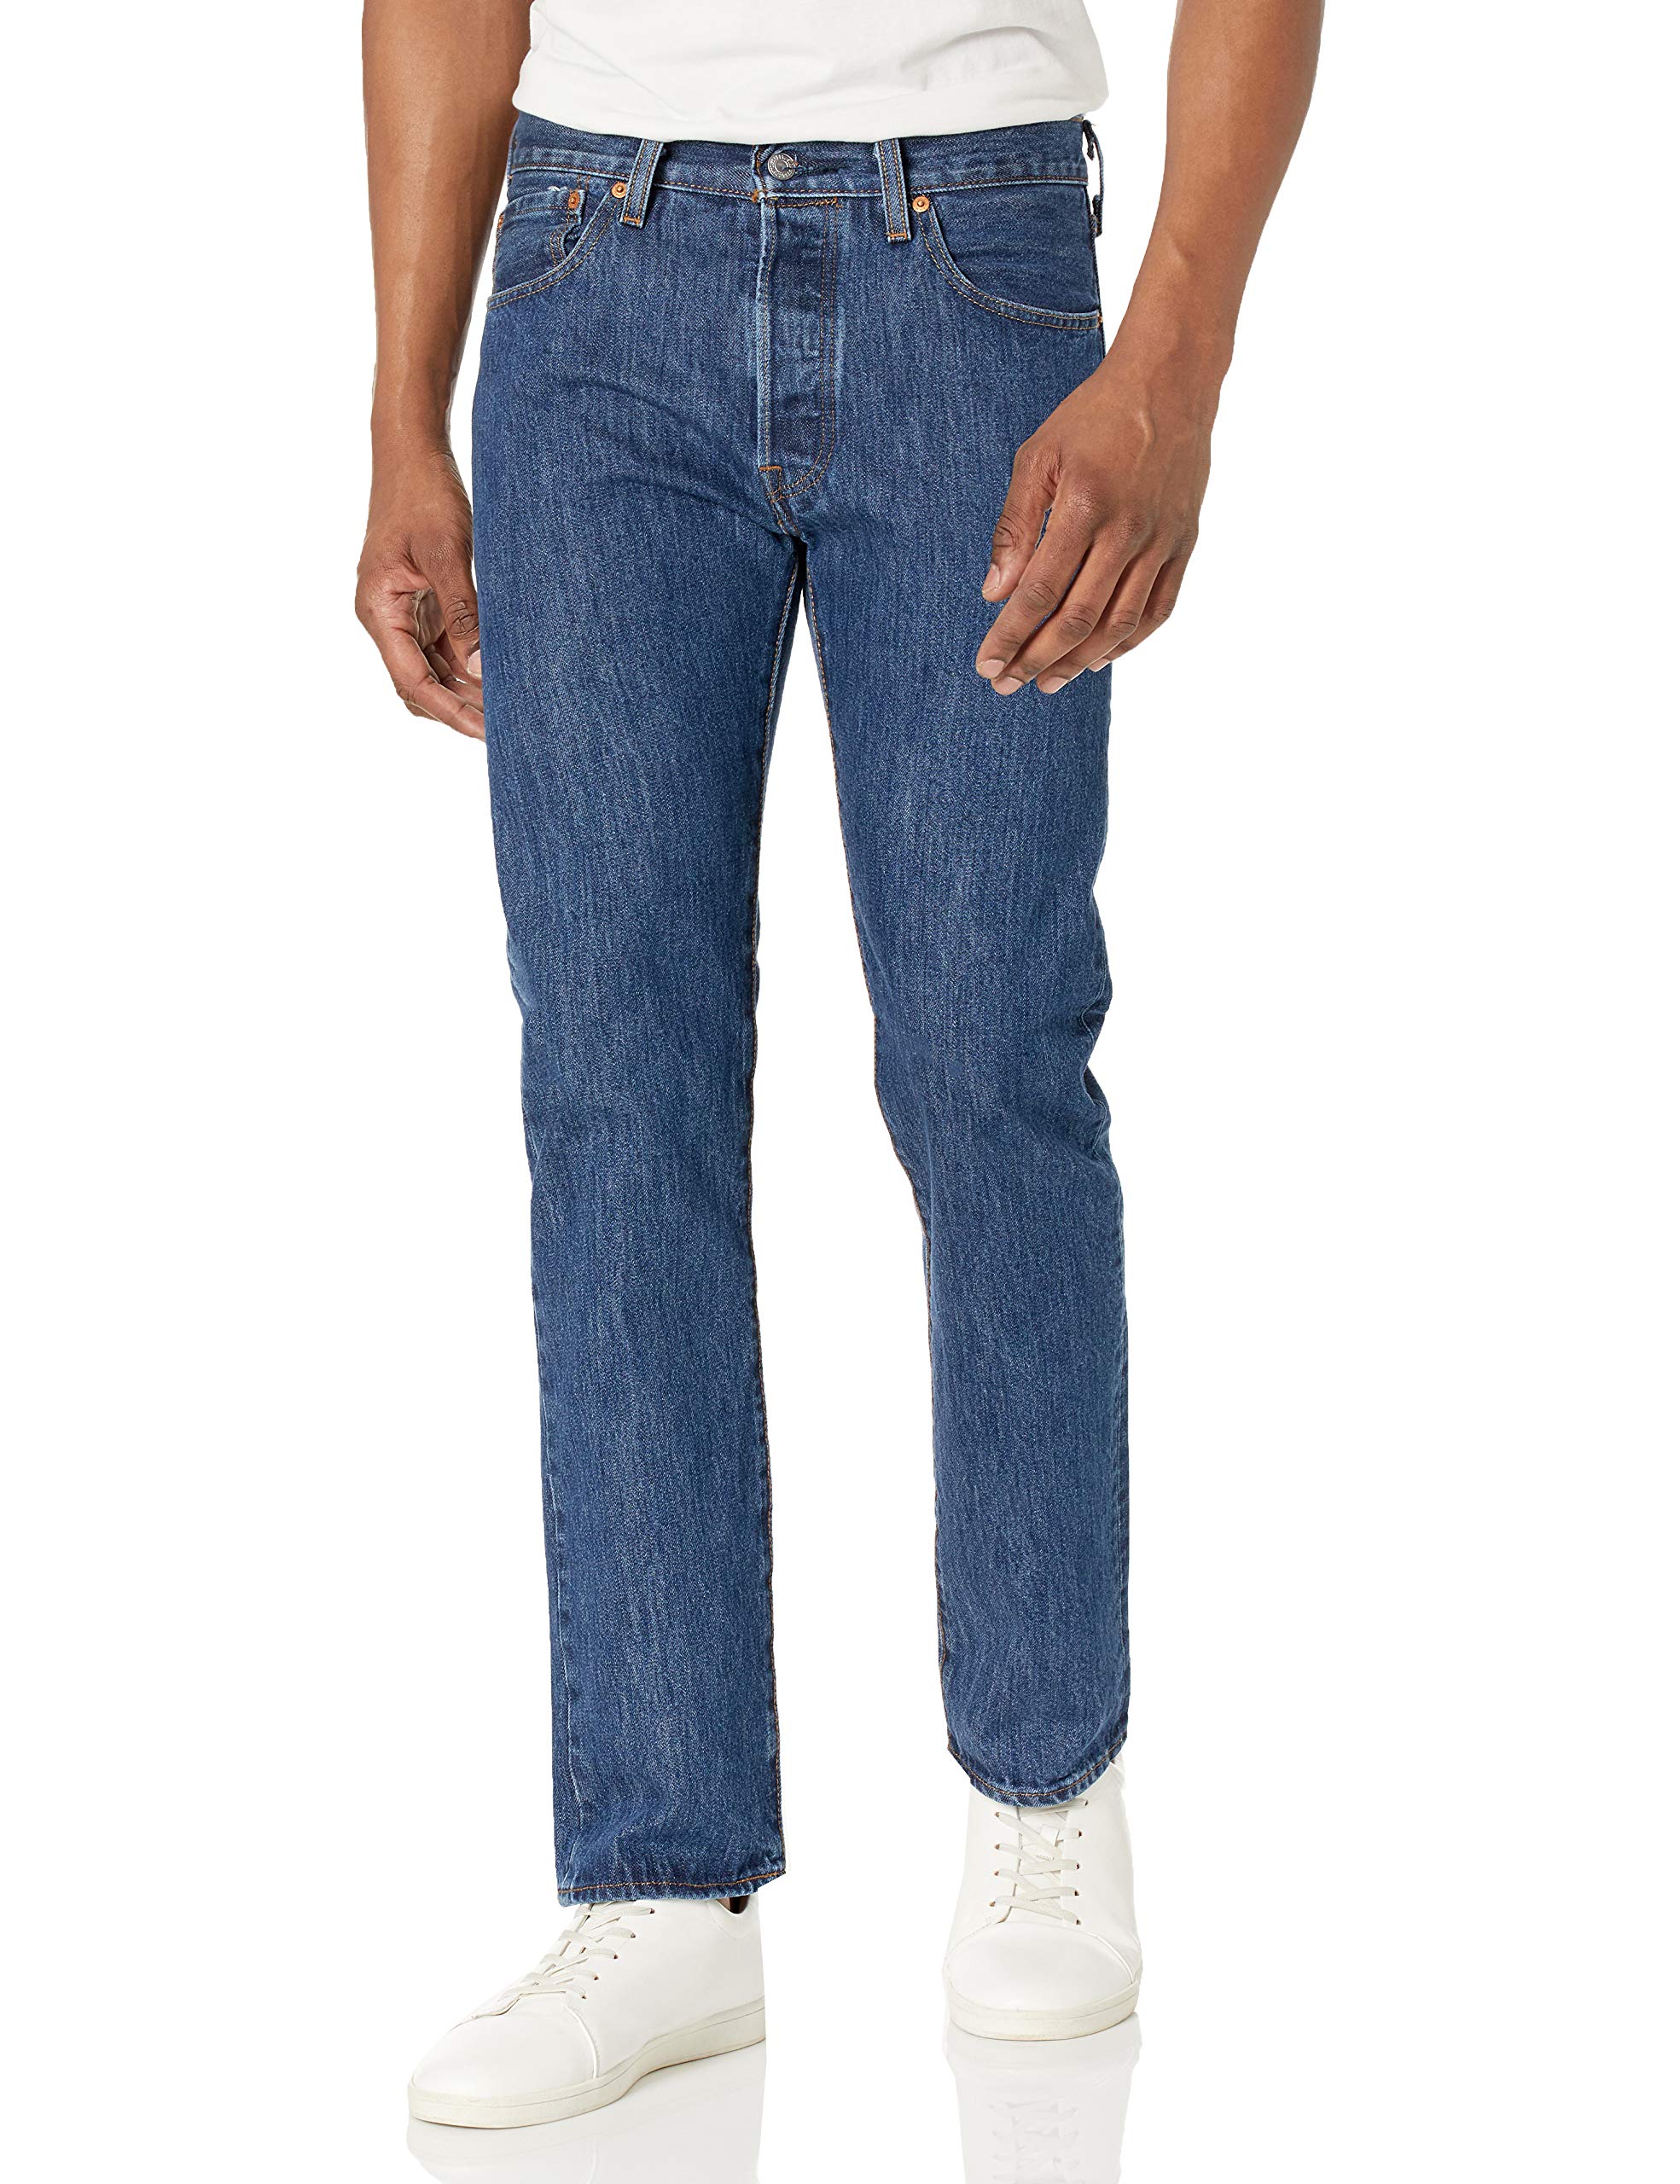 Mua Levi's Men's 501 Original Fit Jeans trên Amazon Mỹ chính hãng 2023 |  Fado